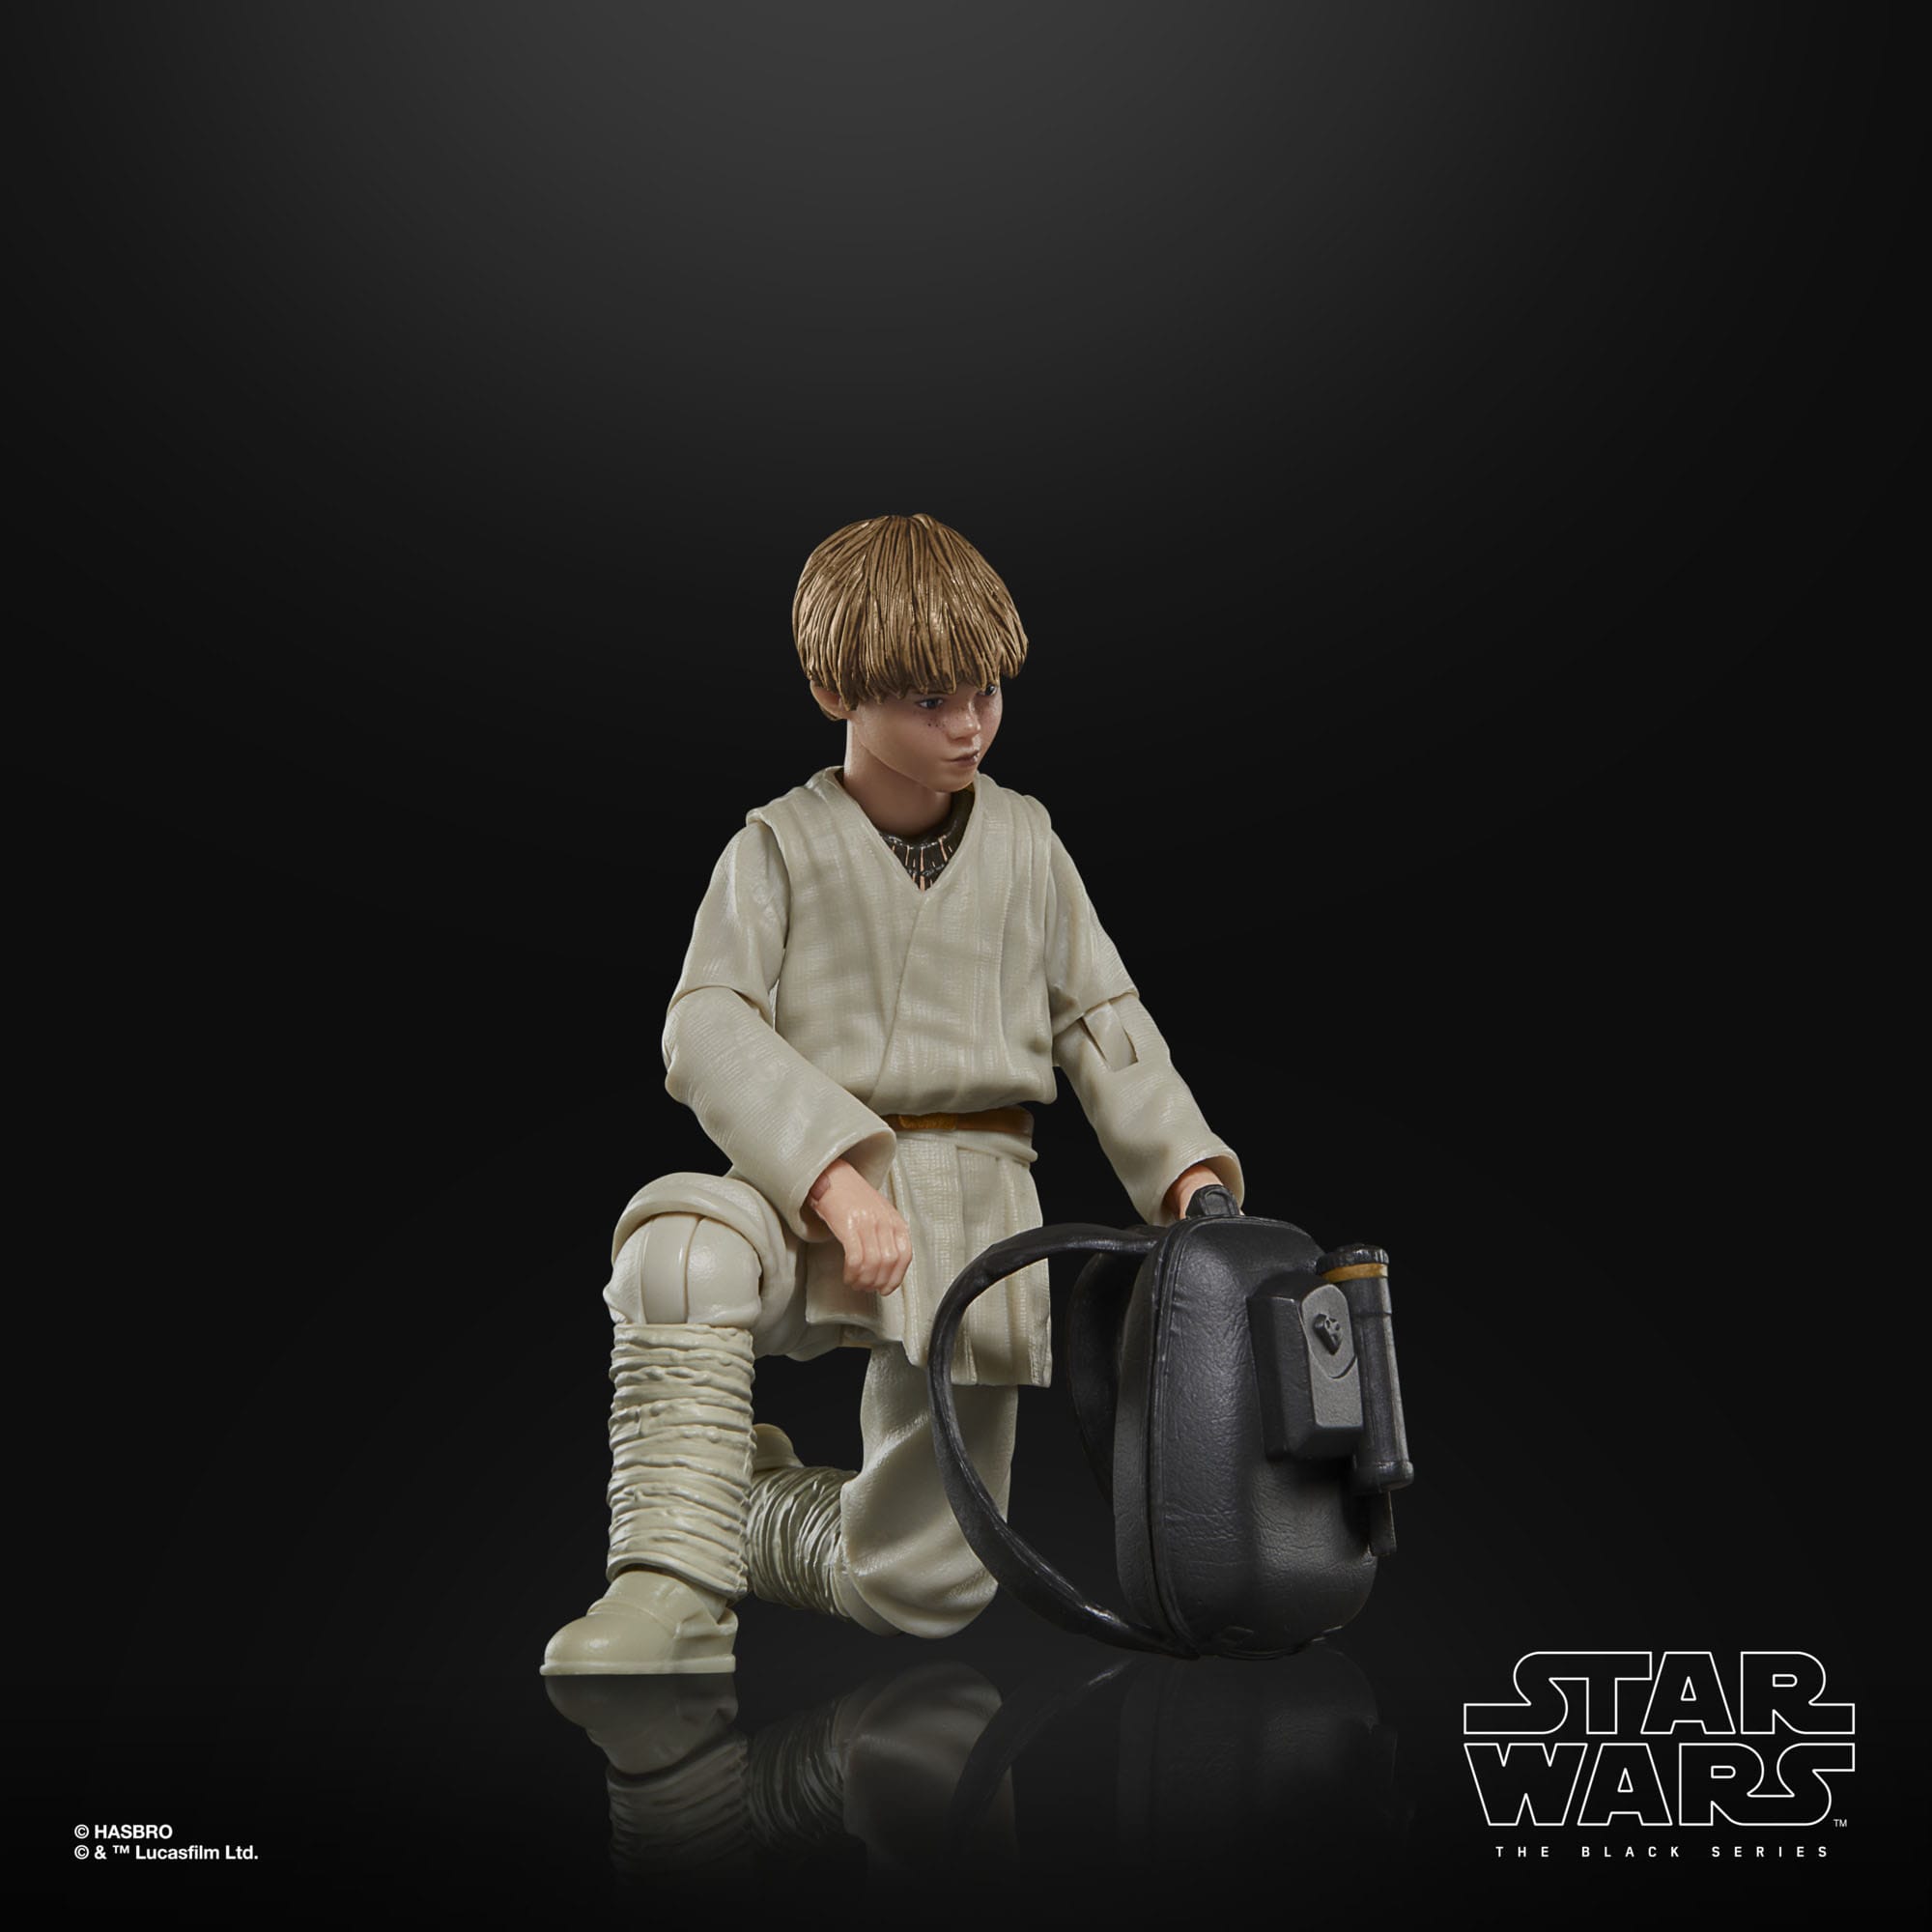 Star Wars Episode I Black Series Actionfigur Anakin Skywalker 15 cm HASG0026 5010996226112